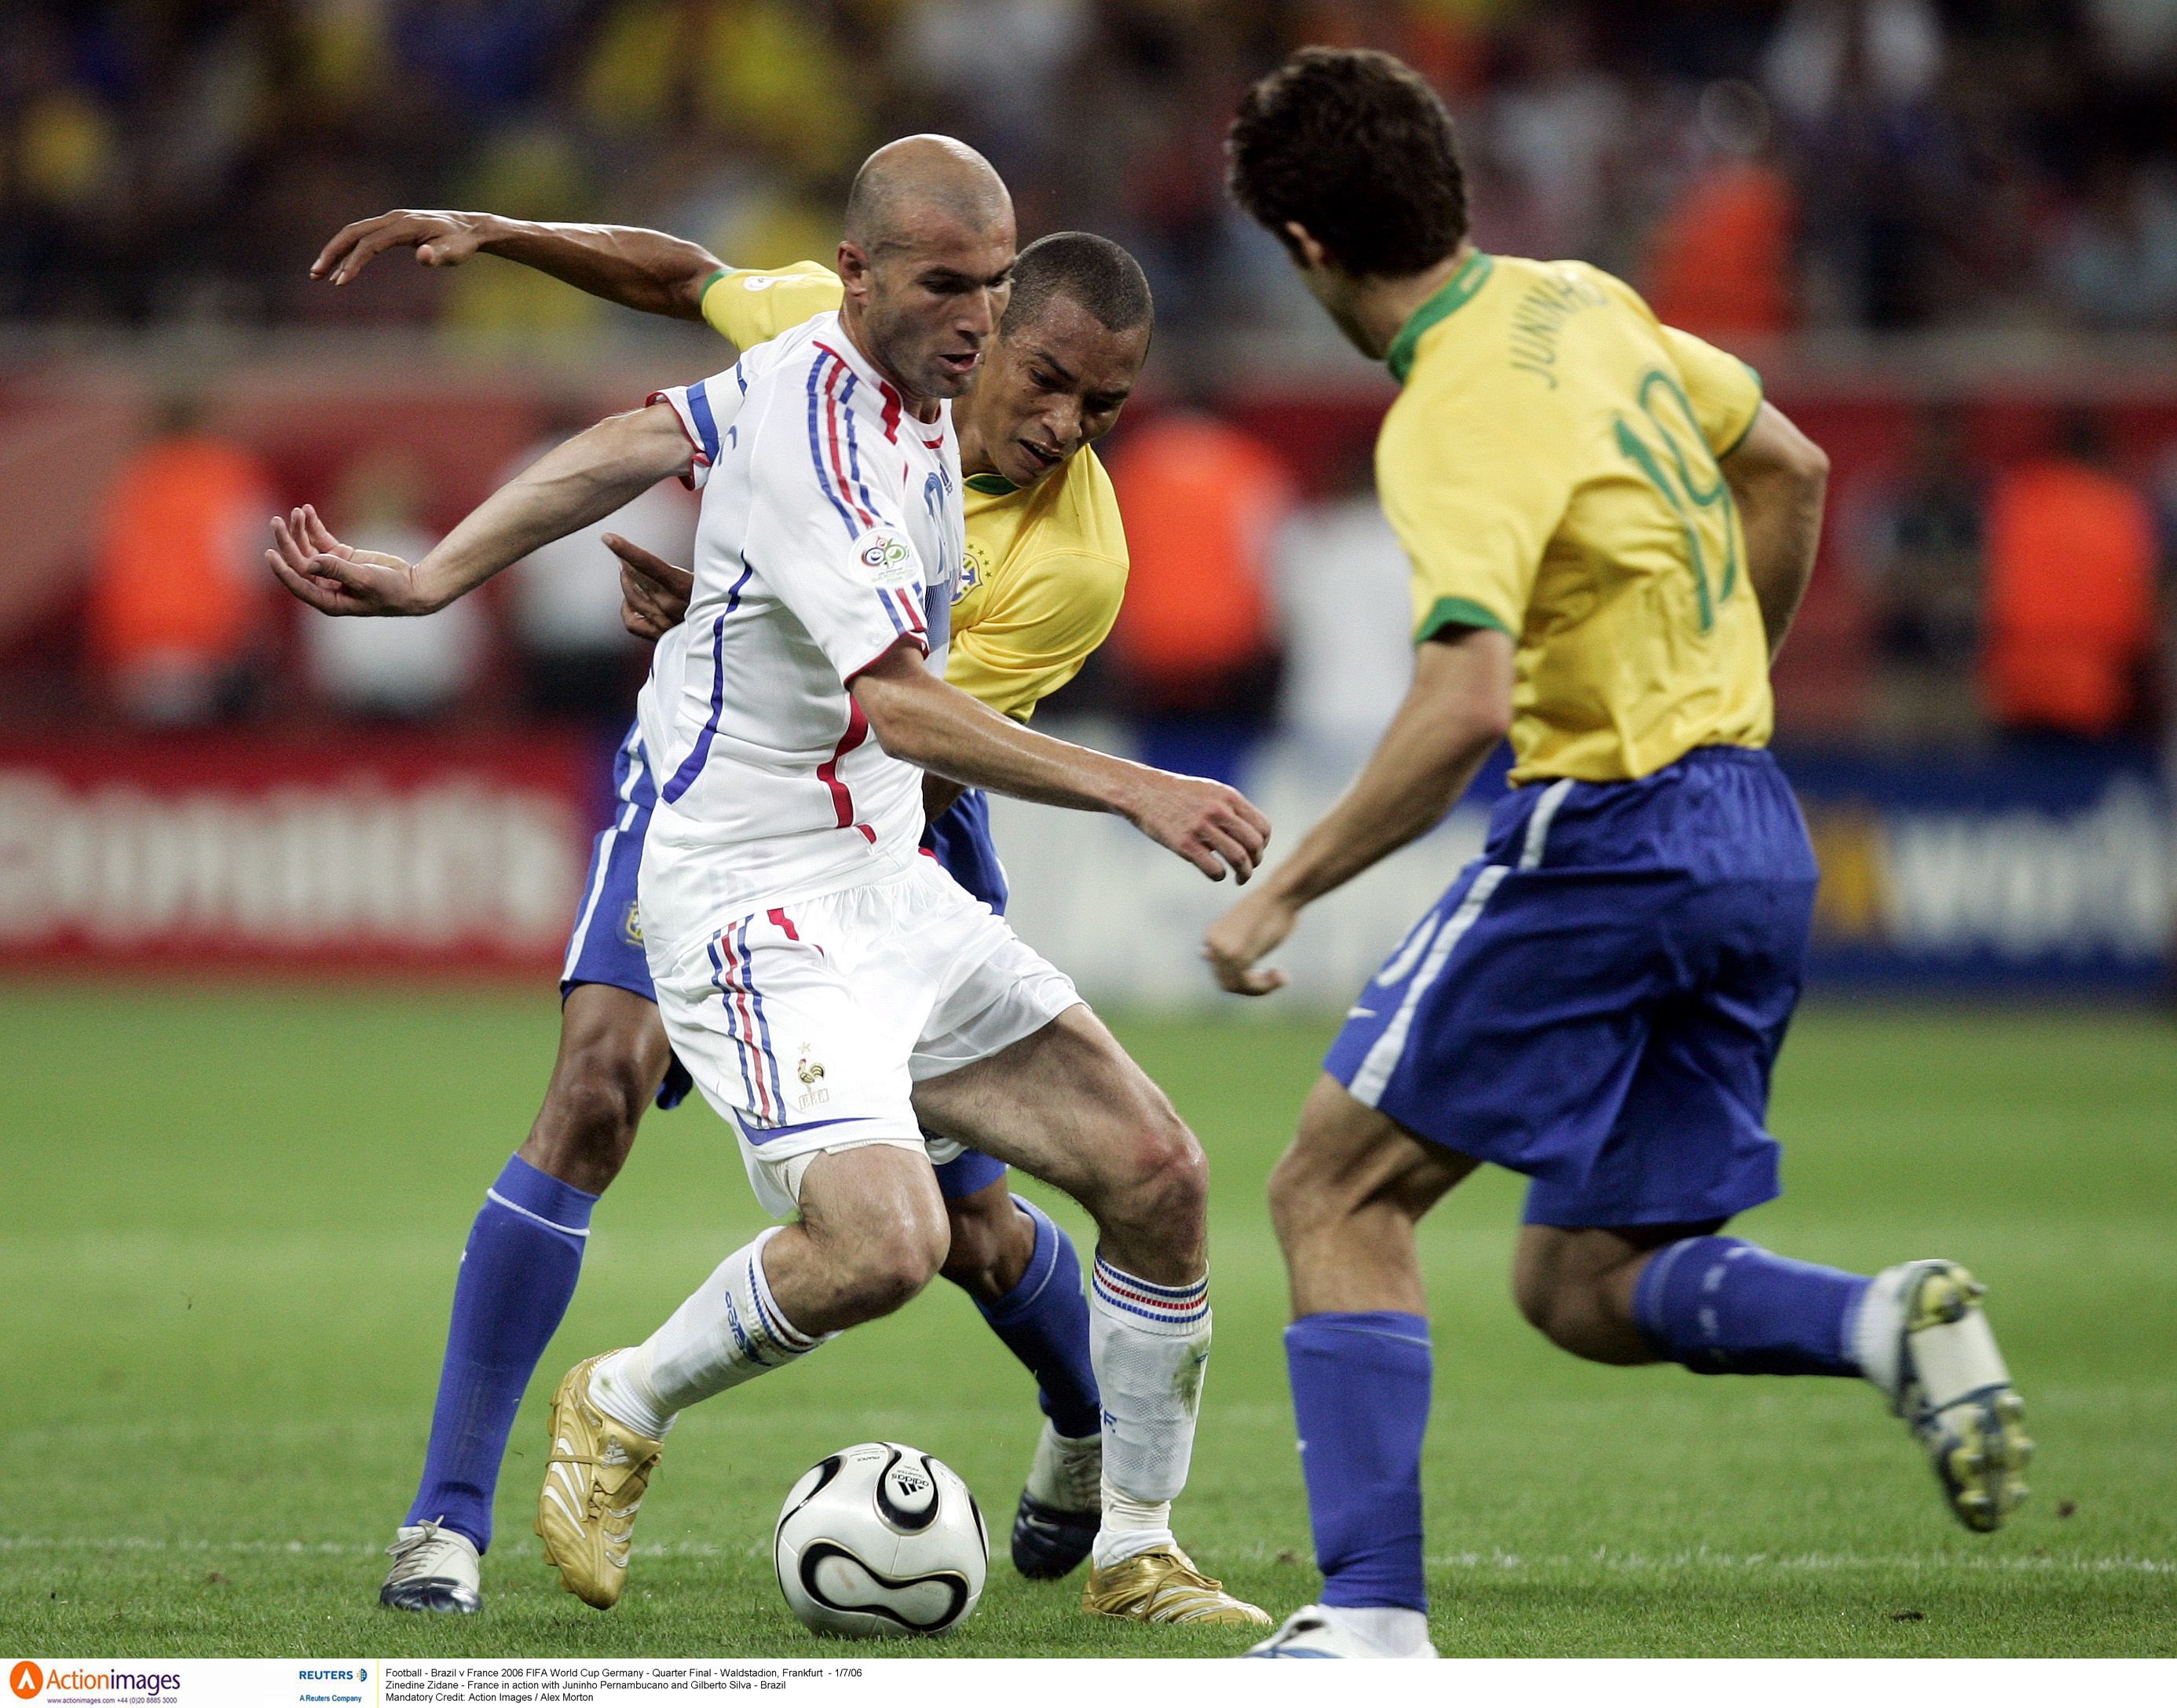 Zinedine Zidane was injured for masterclass in France vs Brazil at